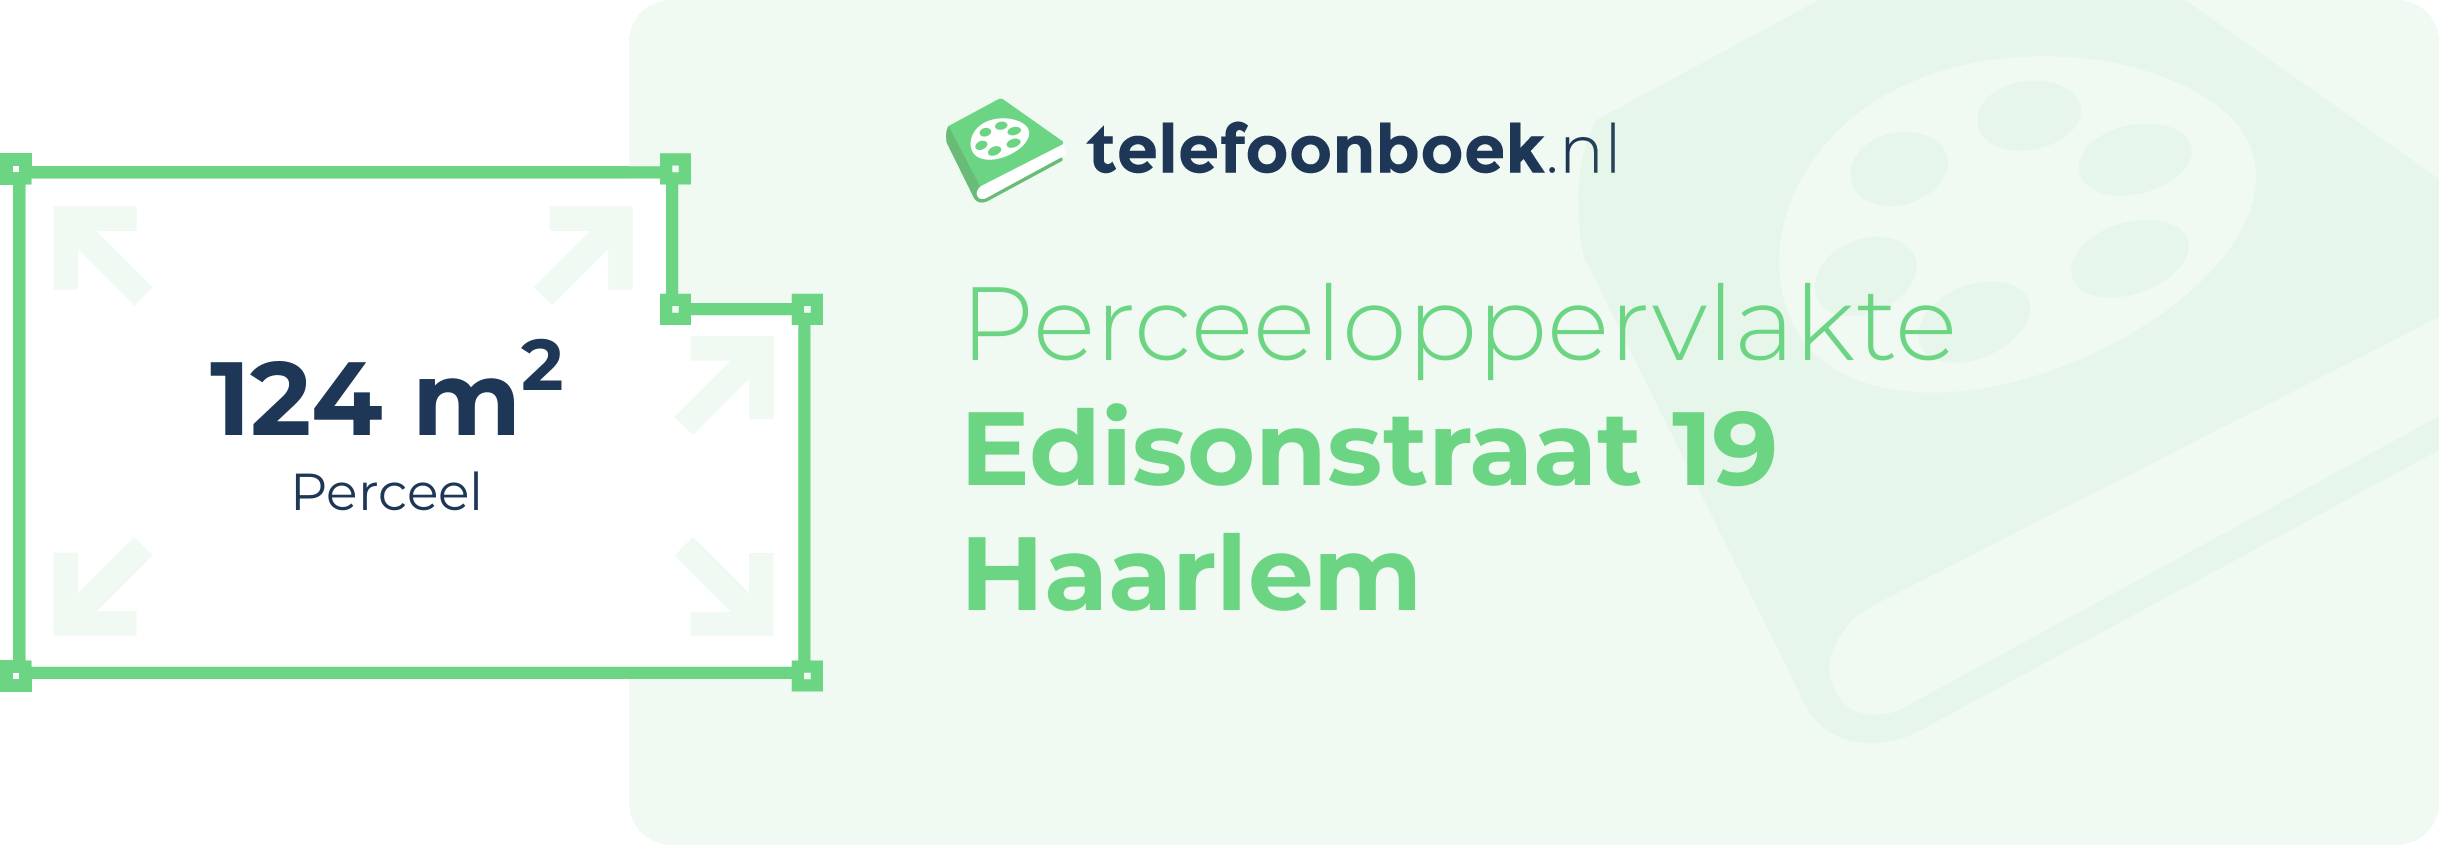 Perceeloppervlakte Edisonstraat 19 Haarlem